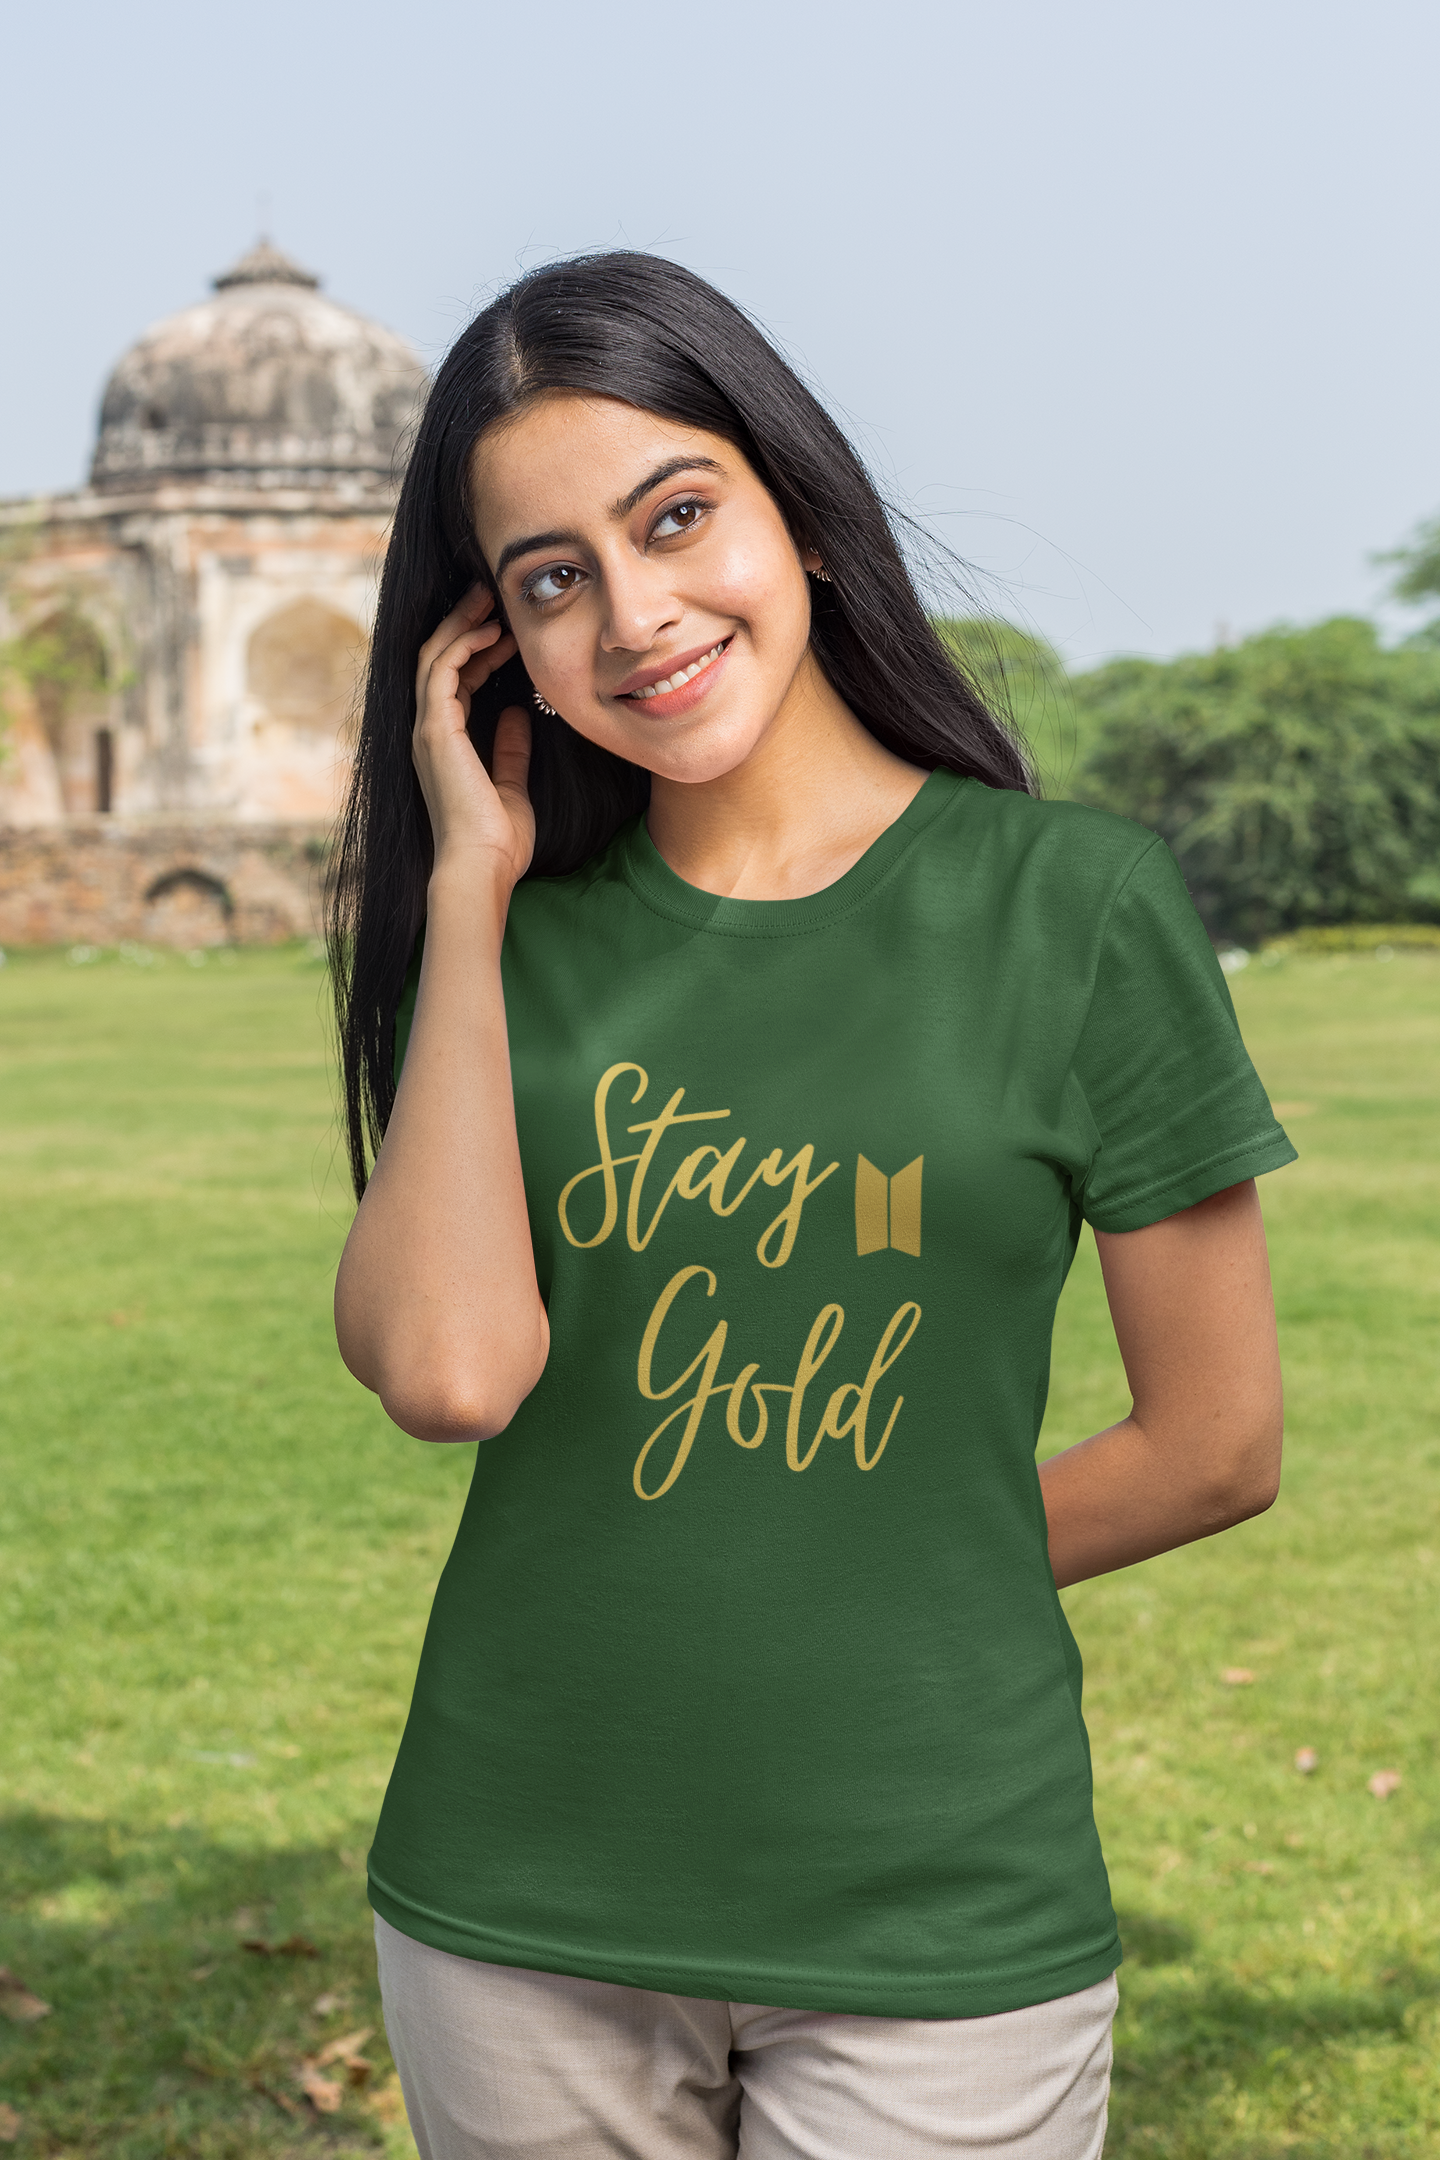 Stay Gold | Premium Half Sleeve Unisex T-Shirt